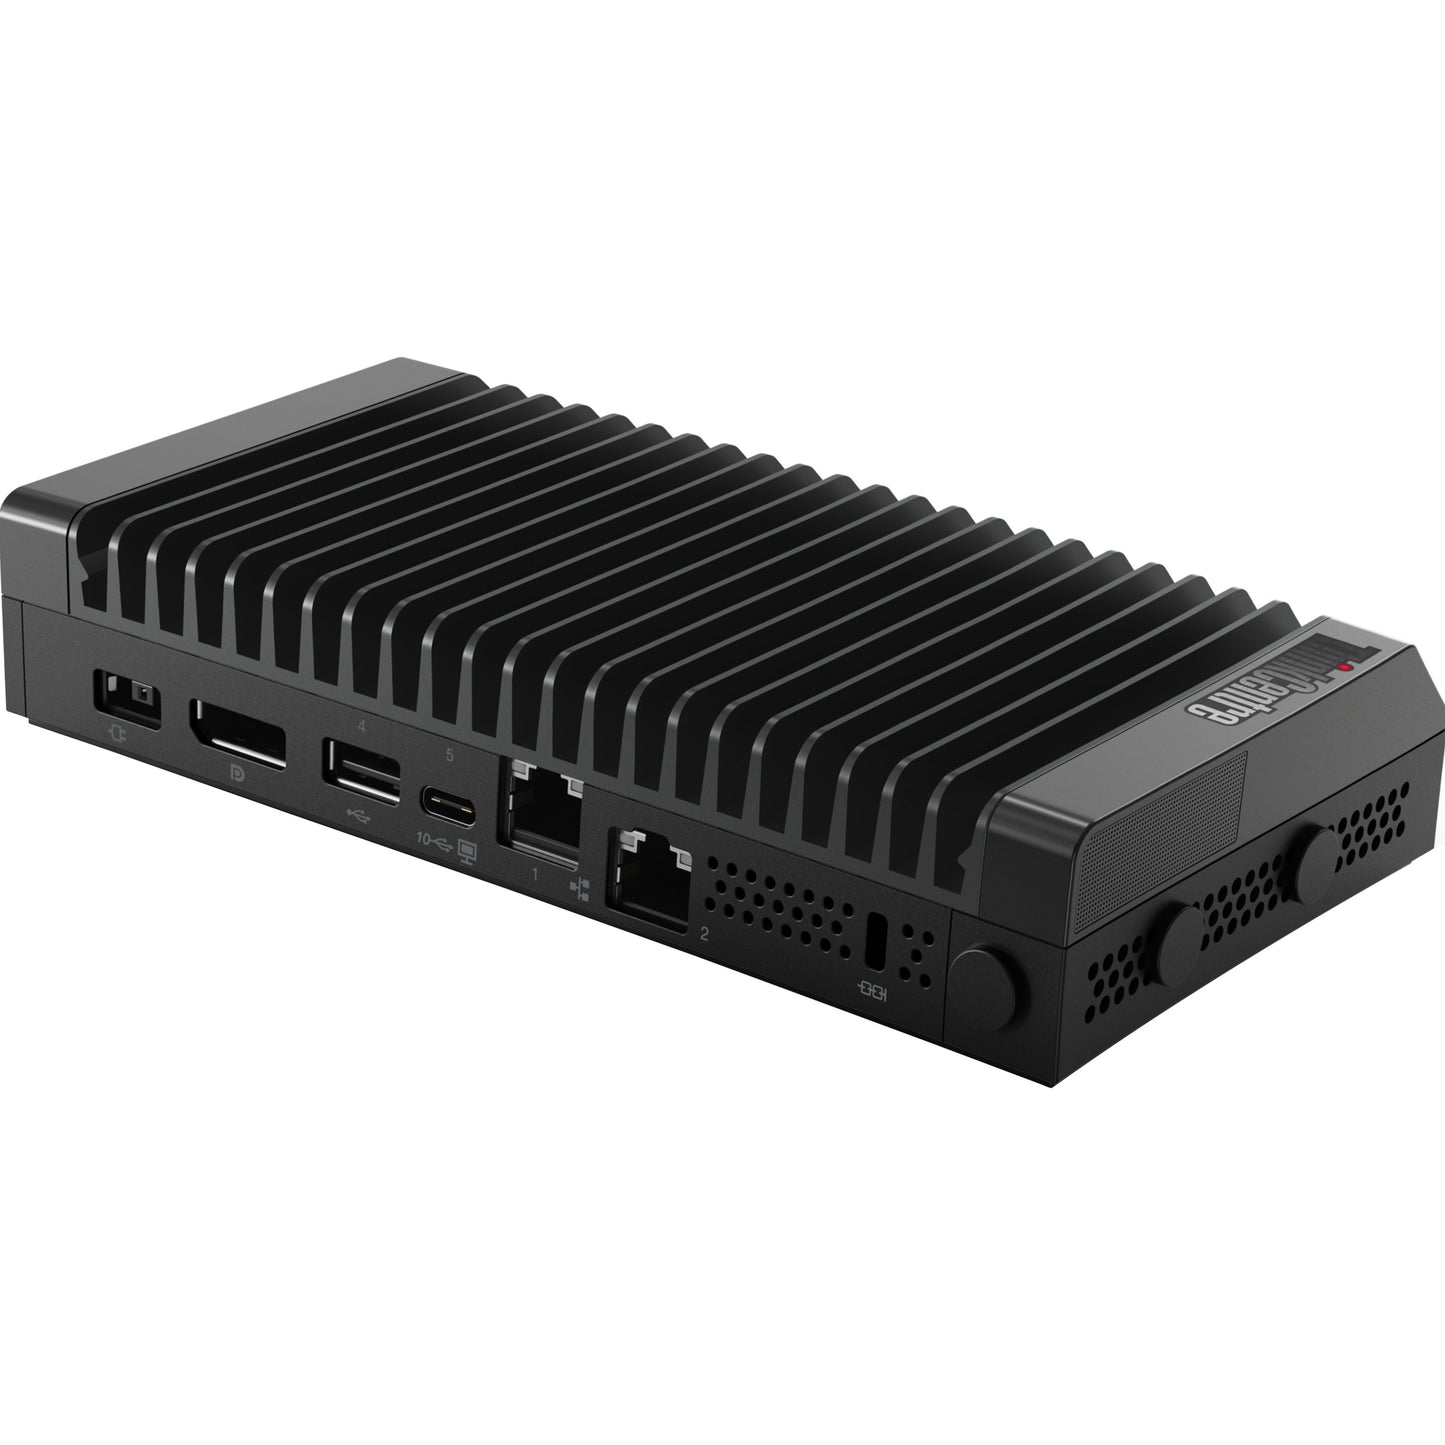 Lenovo ThinkCentre M90n-1 11AH0012US Desktop Computer - Intel Core i3 8th Gen i3-8145U 2.10 GHz - 4 GB RAM DDR4 SDRAM - 512 GB SSD - Ultra Small - Black